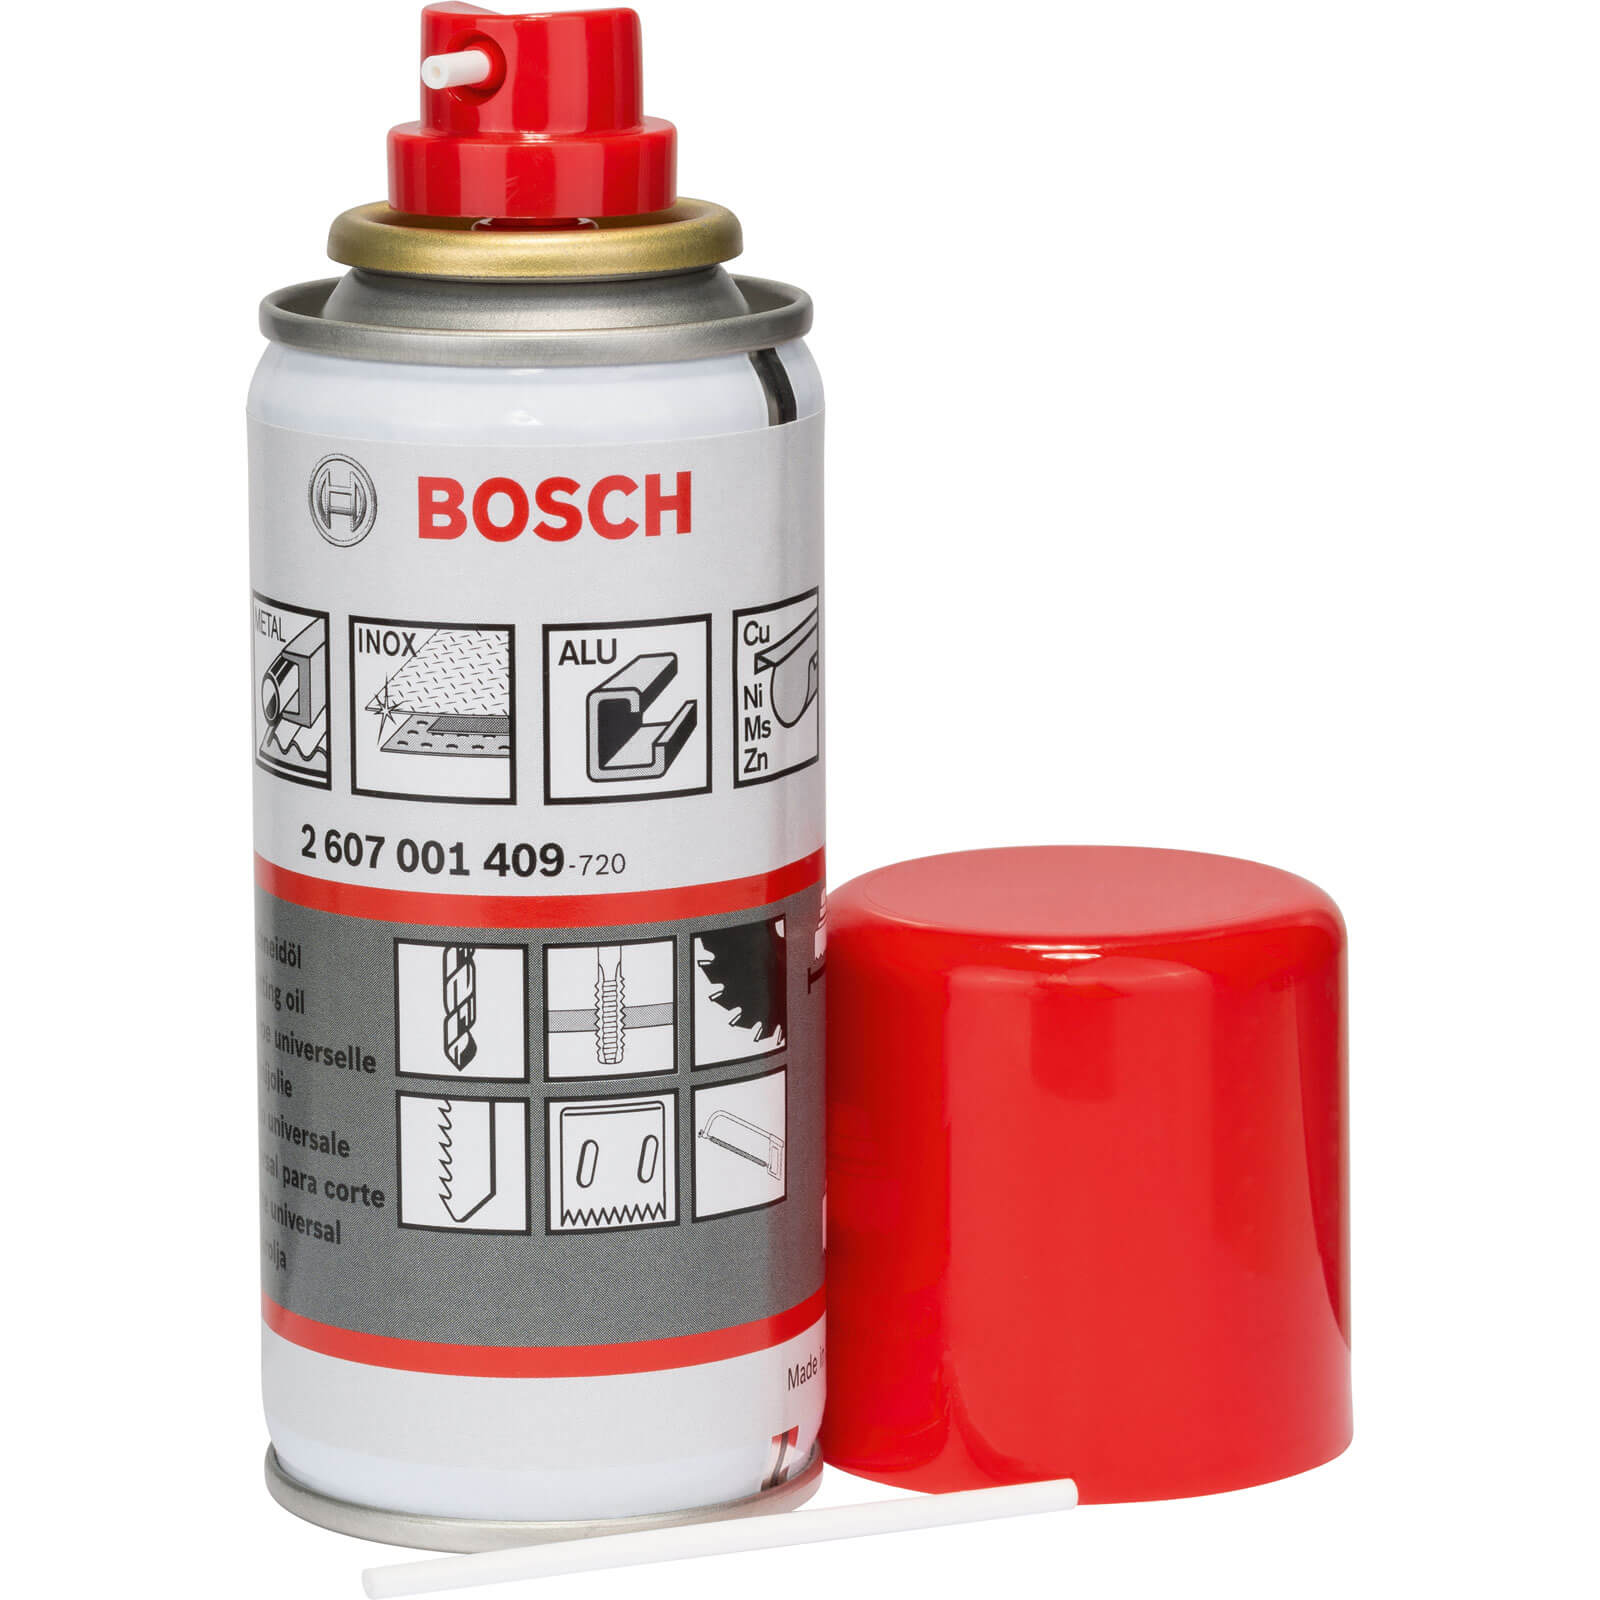 Image of Bosch Universal Cutting Oil 100ml